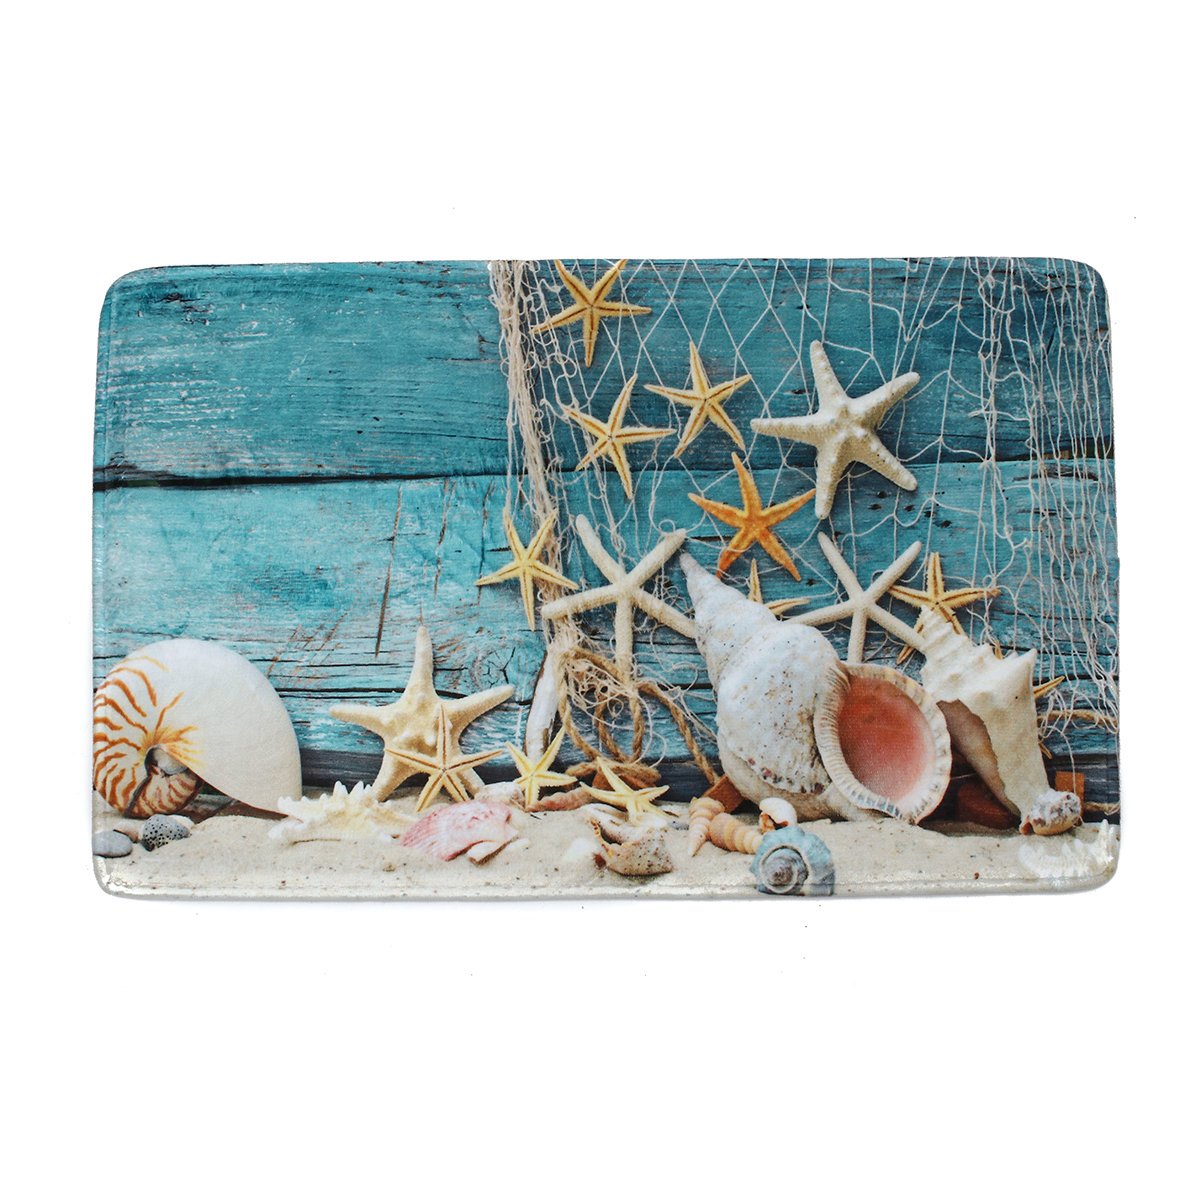 60*90cm Starfish Non-Slip Floor Kitchen Bath Door Carpet Bathroom Mat Rug Pad